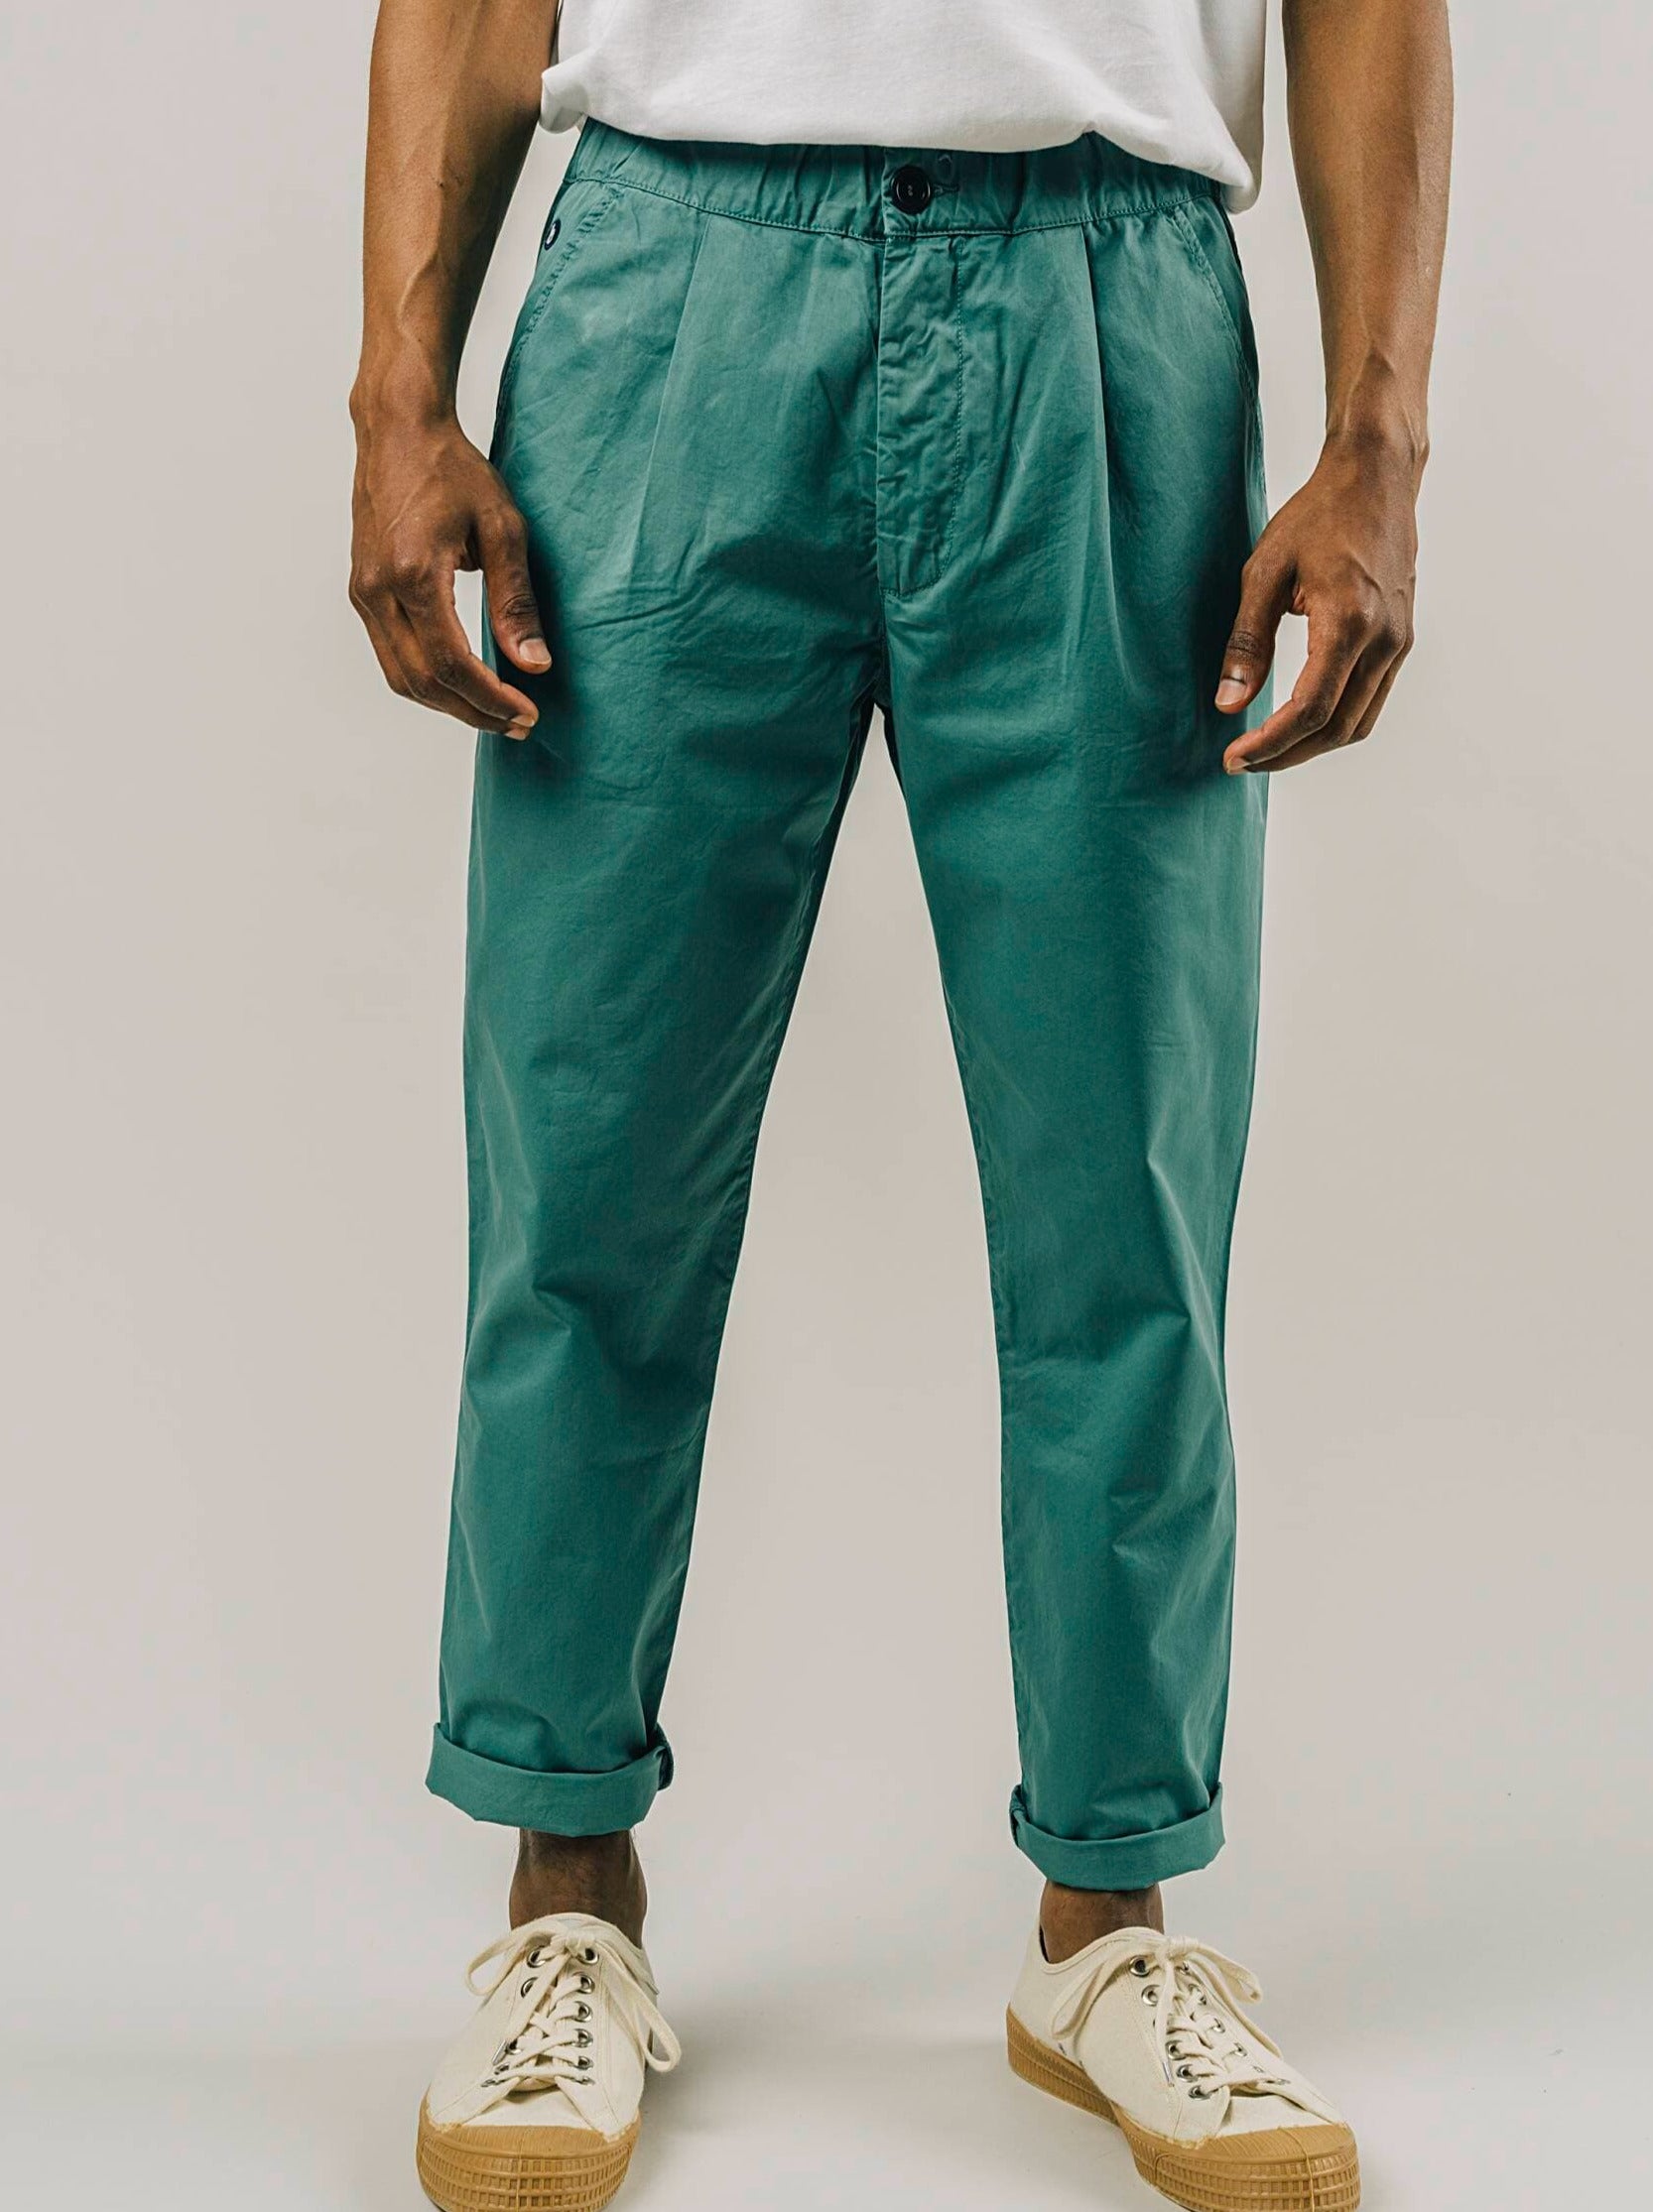 Brava Fabrics Pants Comfort Chino Jungle nachhaltige Mode ethische Mode